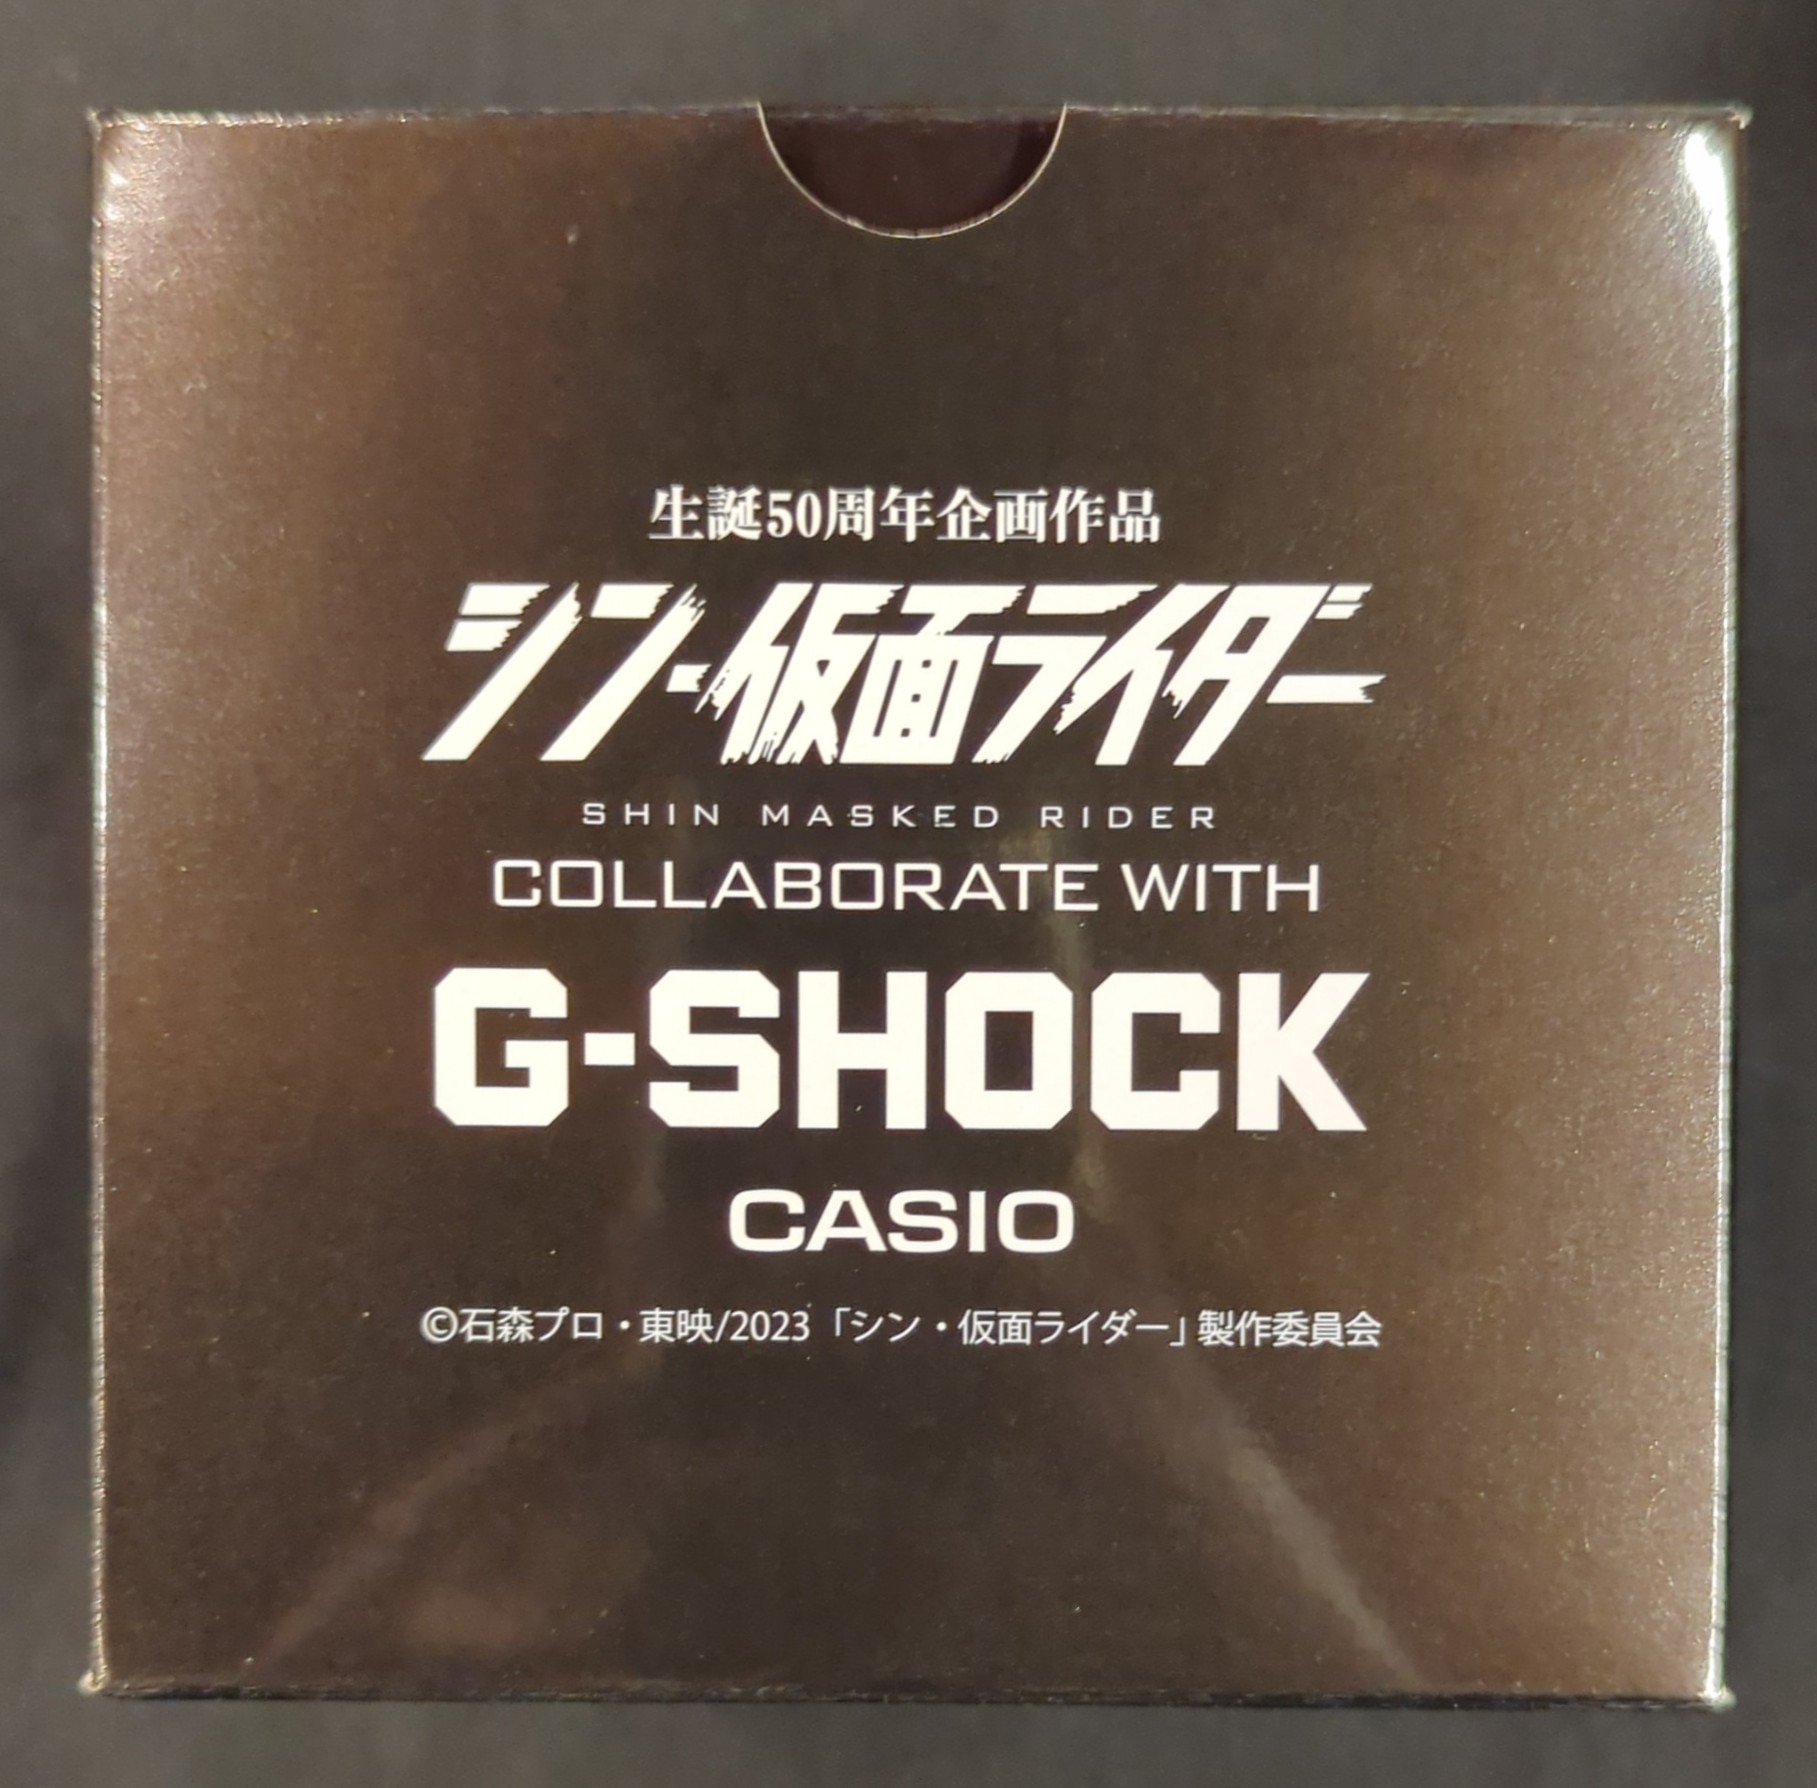 G-SHOCK DW-5600 SHOCKER モデル シン仮面ライダー